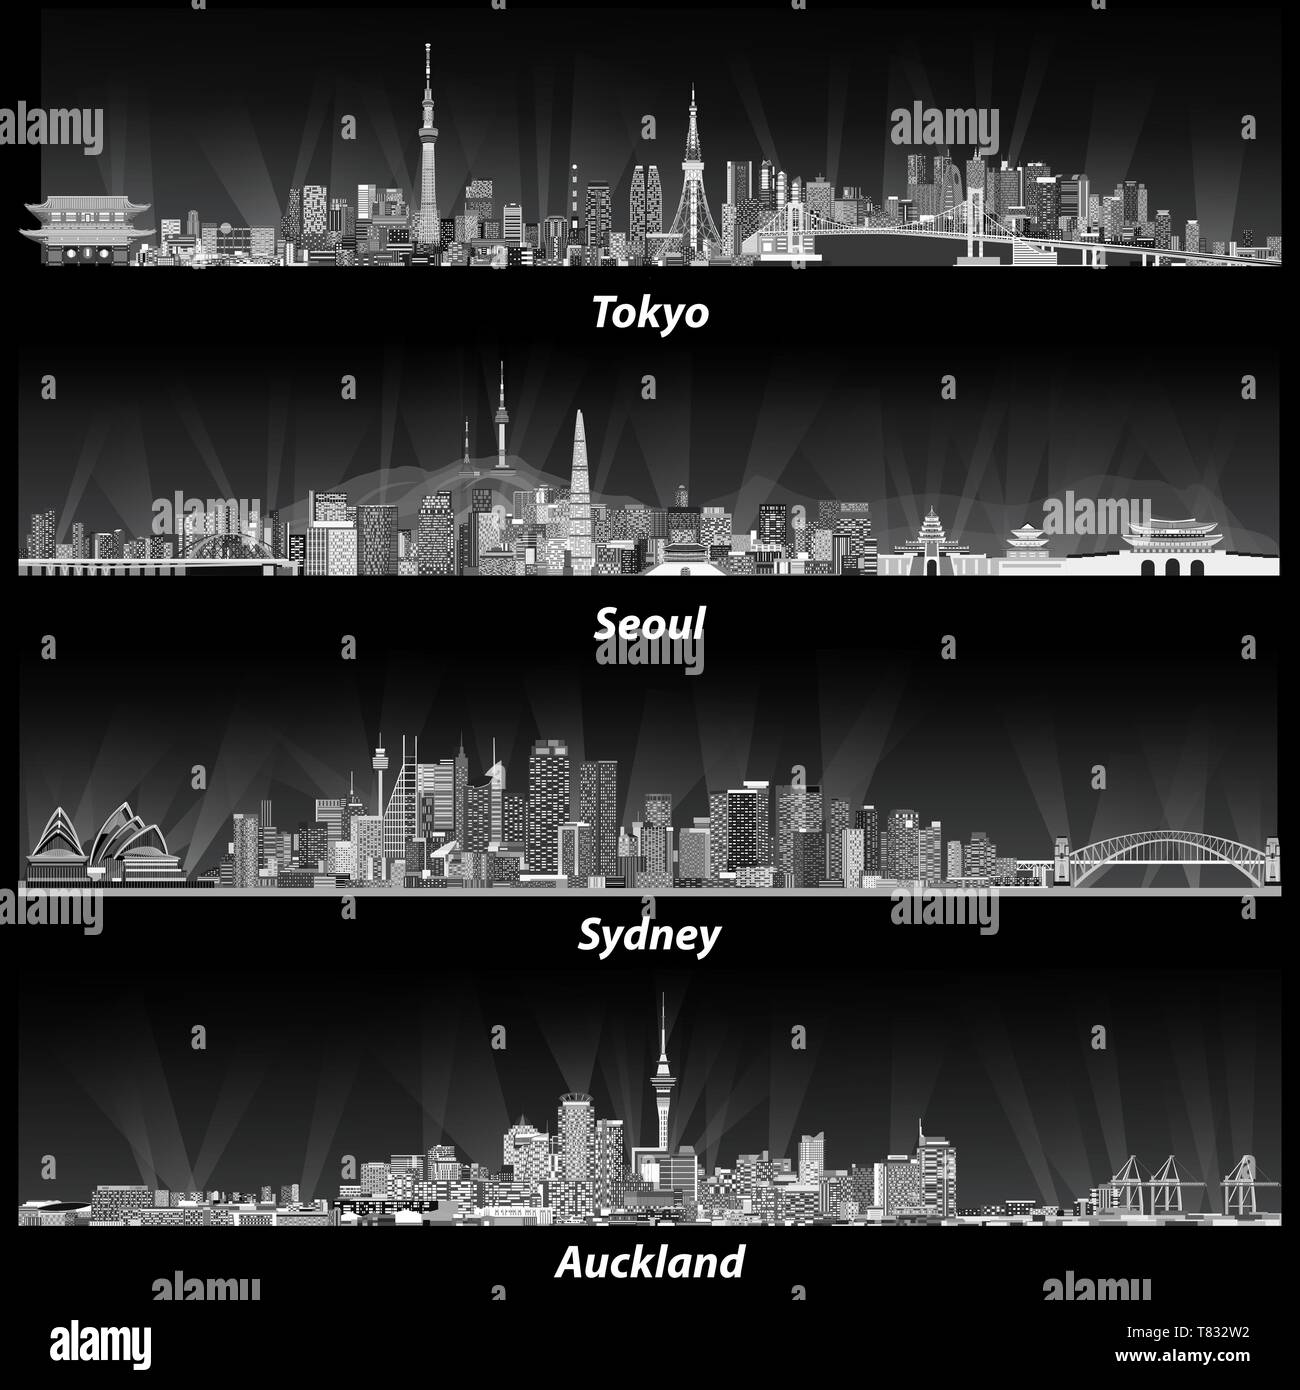 Vektorgrafiken in Tokio, Seoul, Sydney und Auckland Skyline Stock Vektor